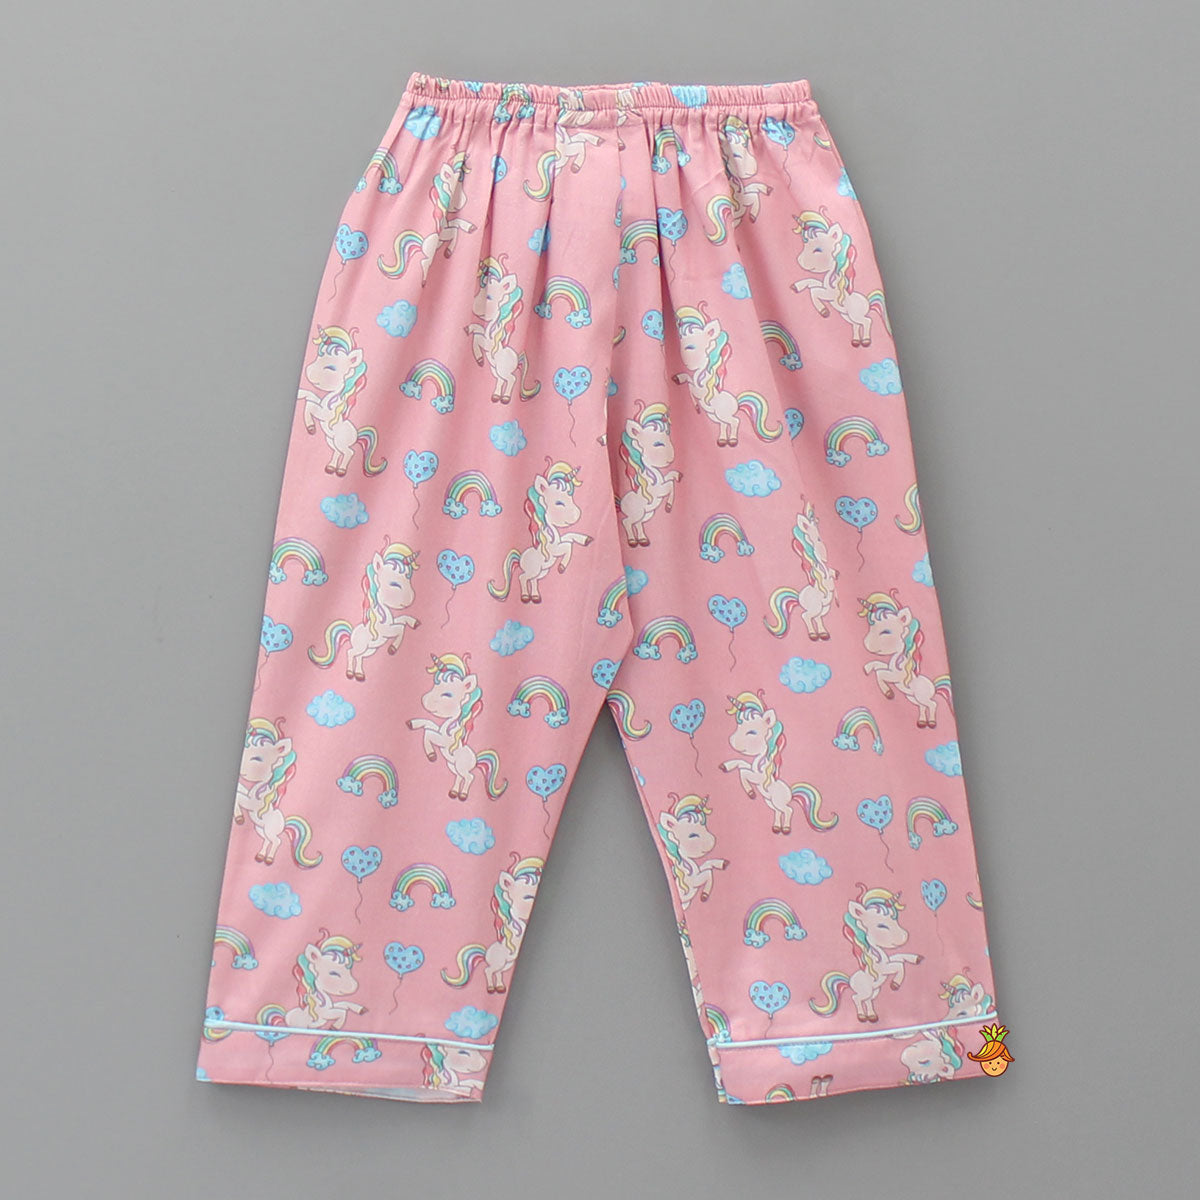 Pretty Unicorn Printed Pink Sleepwear